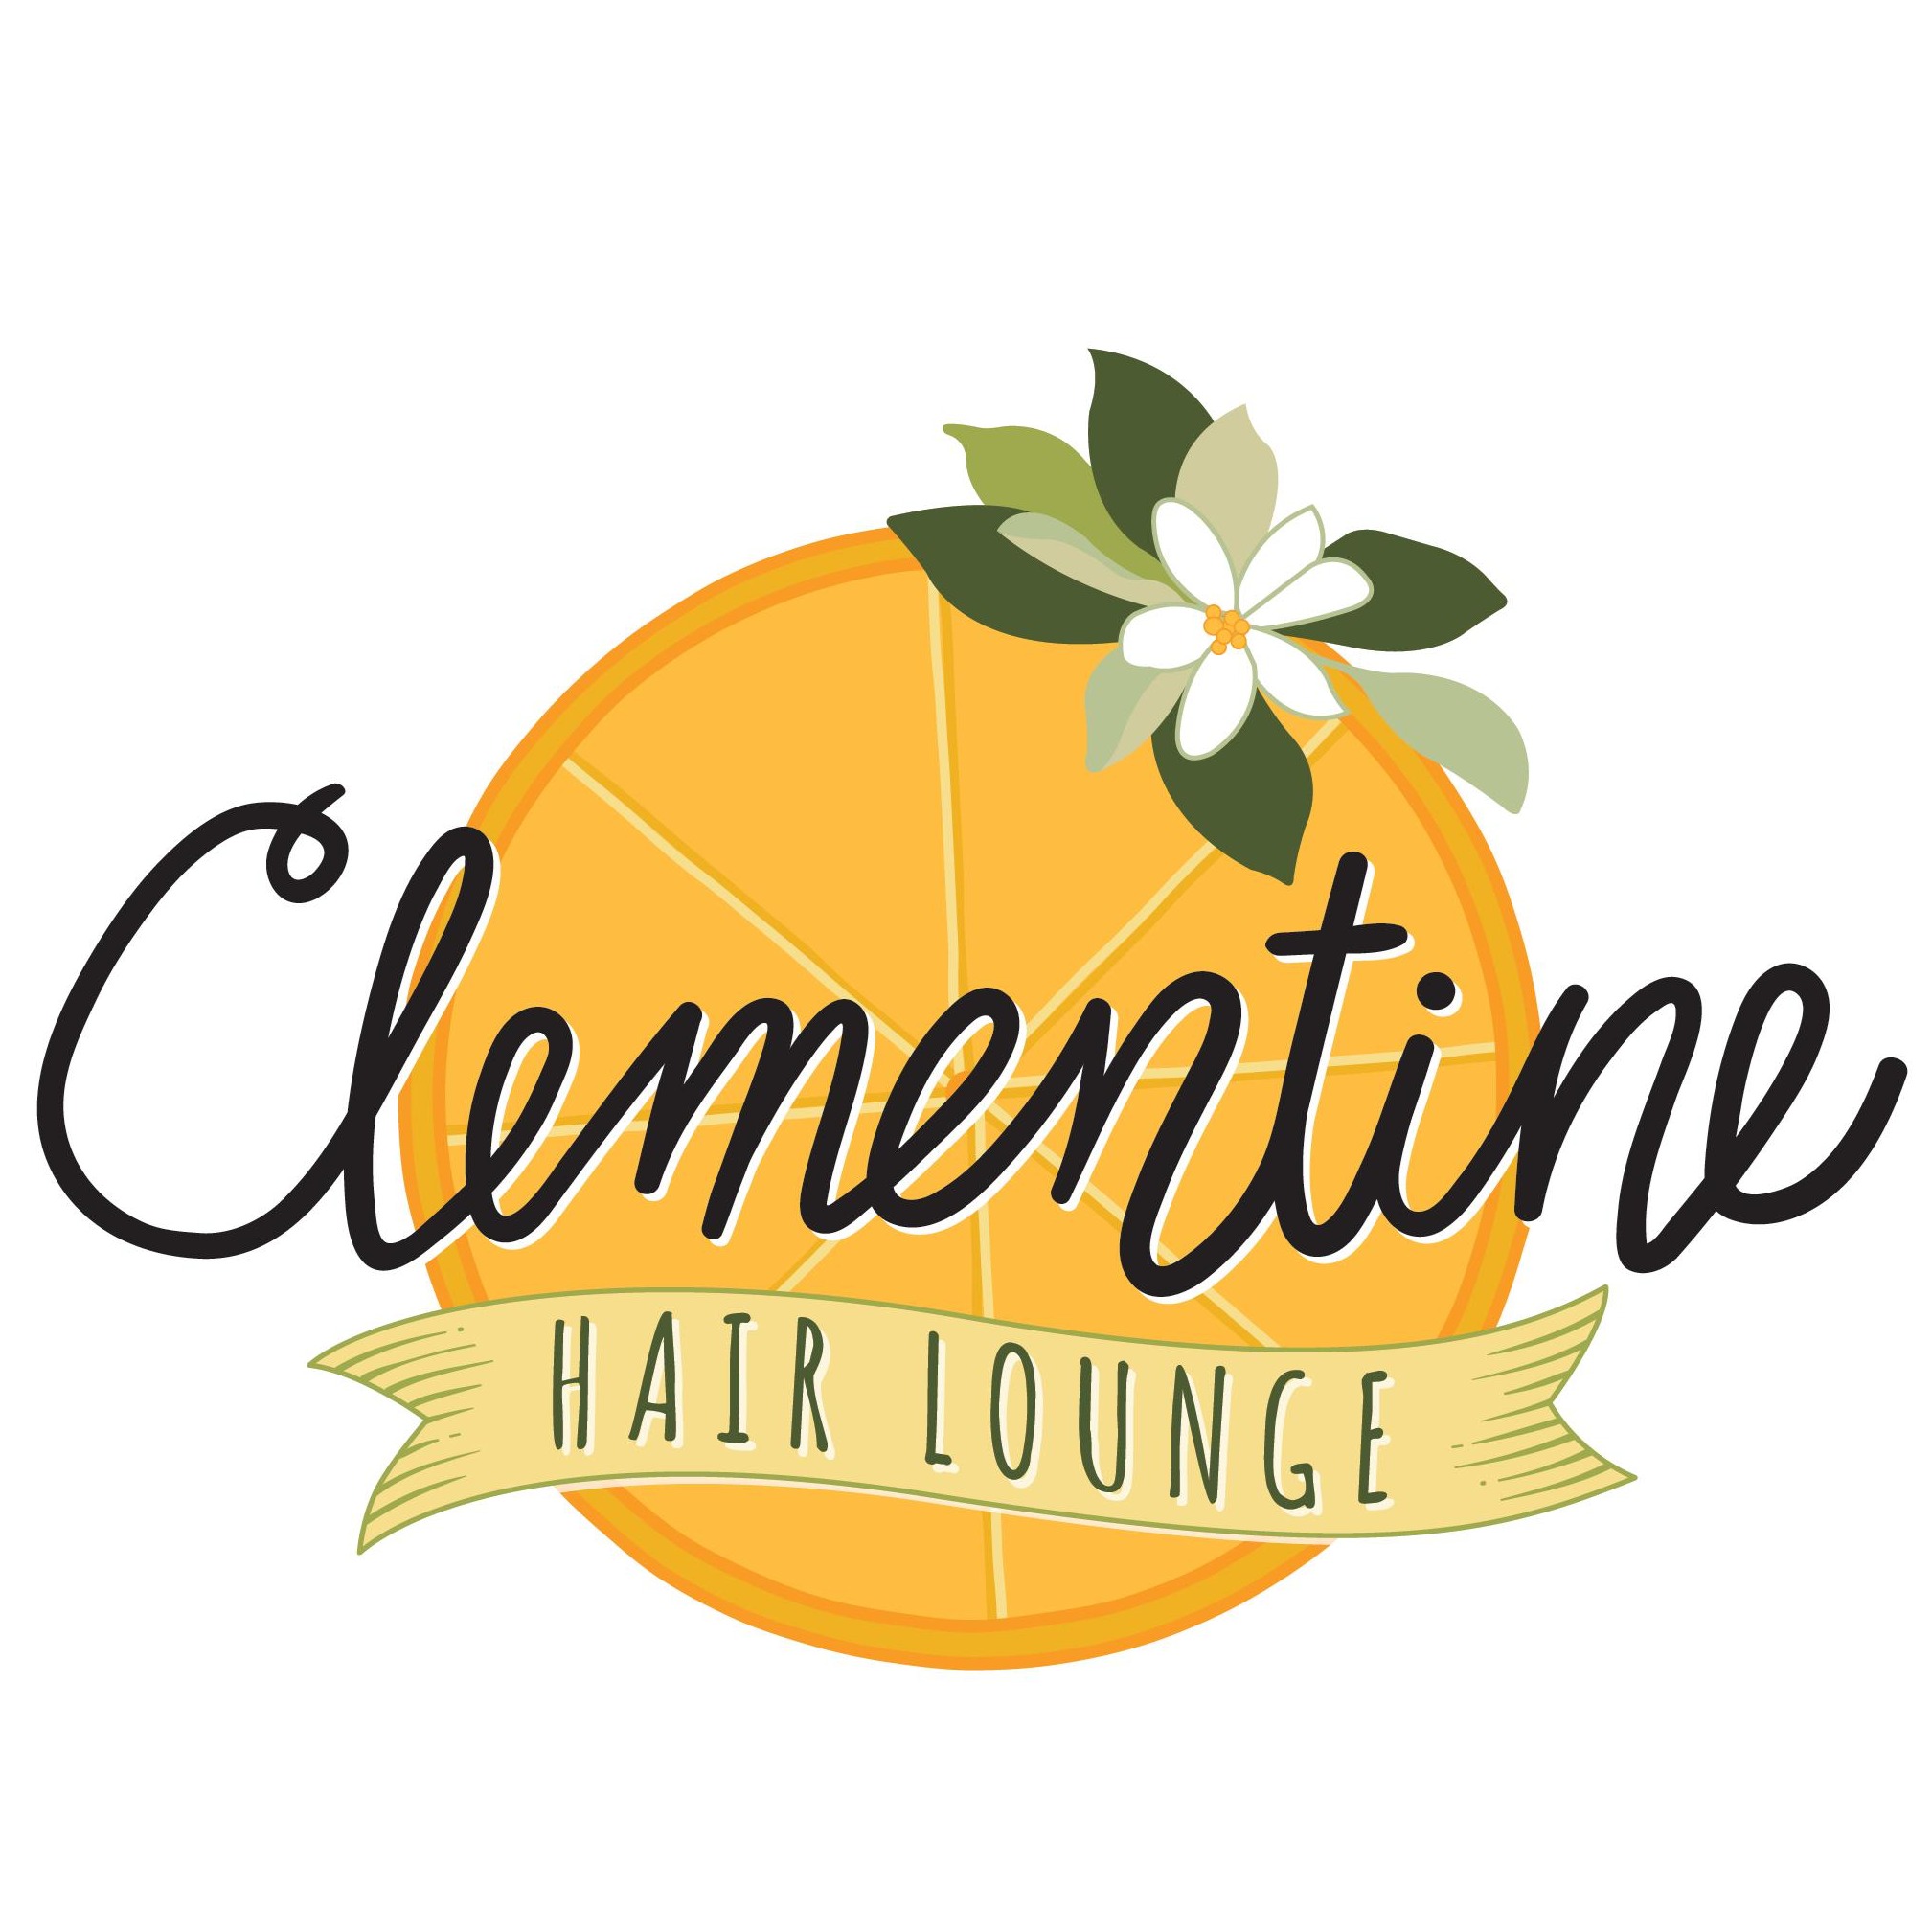 Clementine Hair Lounge